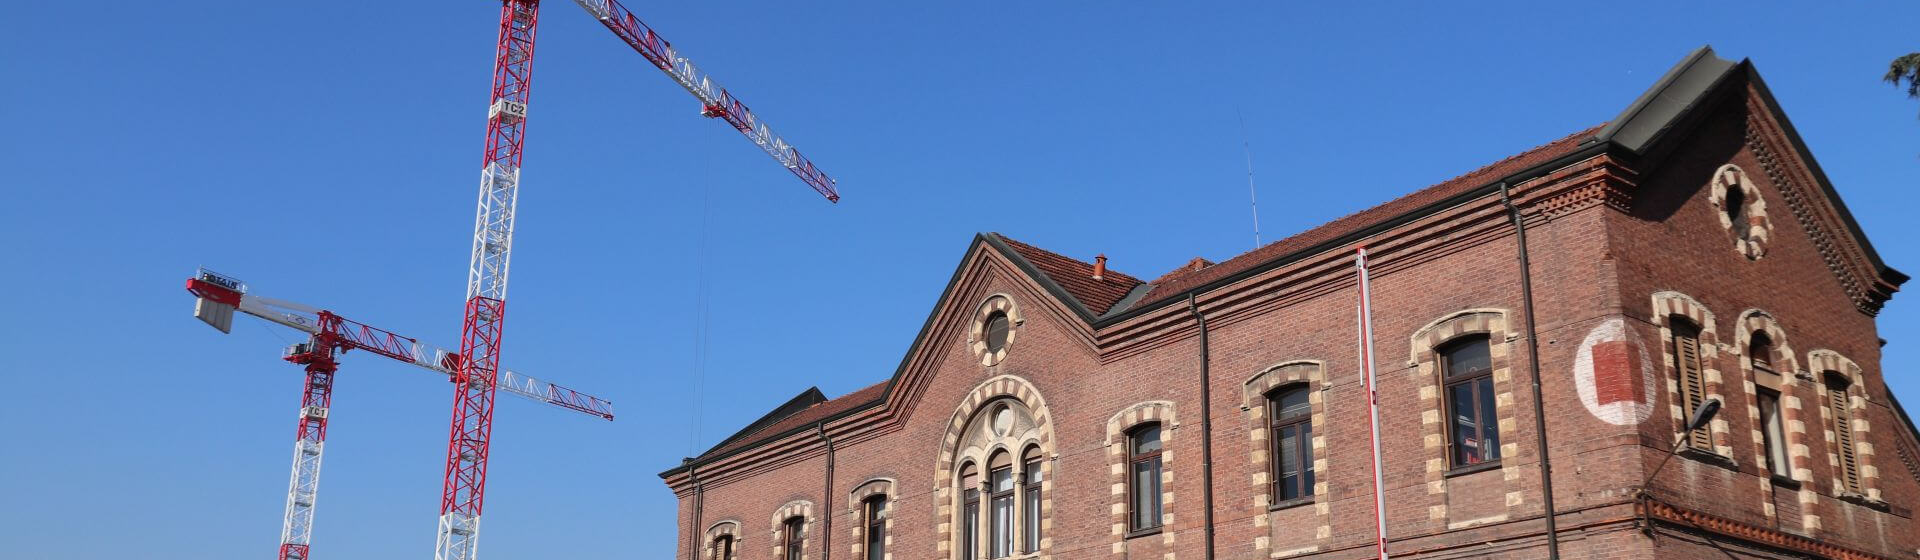 Potain-cranes-to-aid-major-renovation-of-historic-Milan-hospital-in-Italy-01.jpg